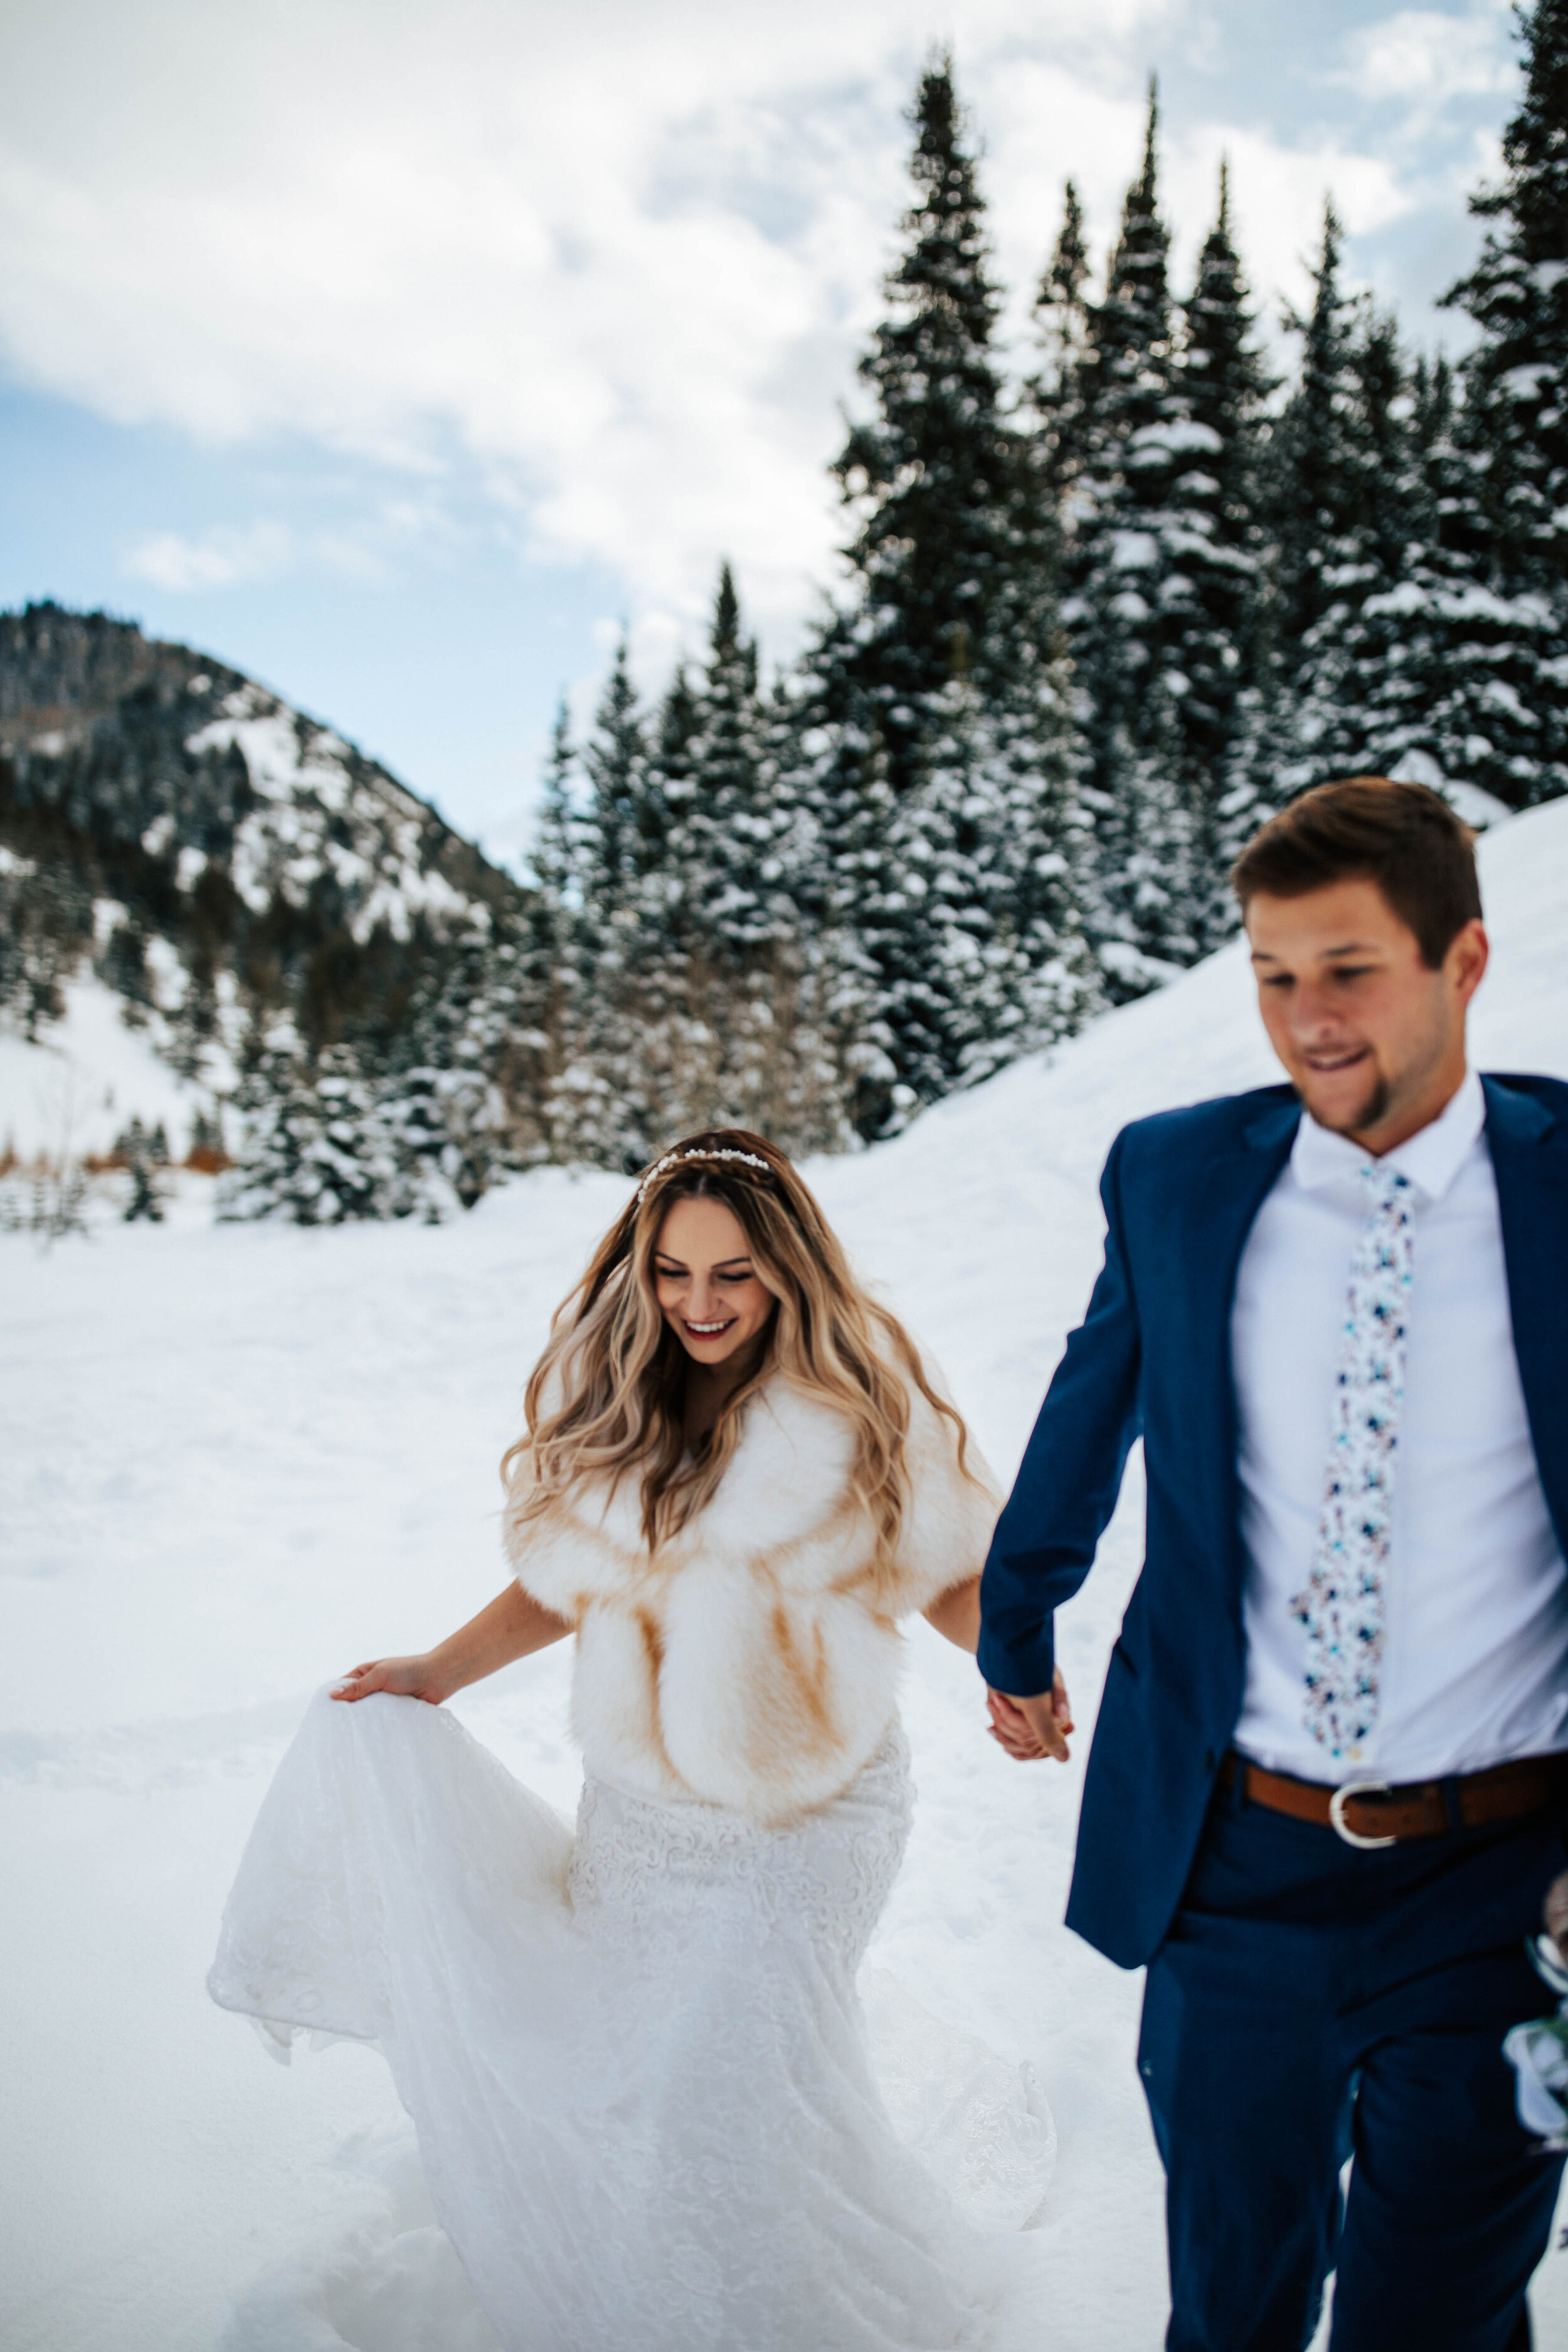 Wedding couple winter wedding bridals snow #winterwedding #weddingphotographer #bridals #bridalshoot #coupleshoot photoshoot running bride and groom